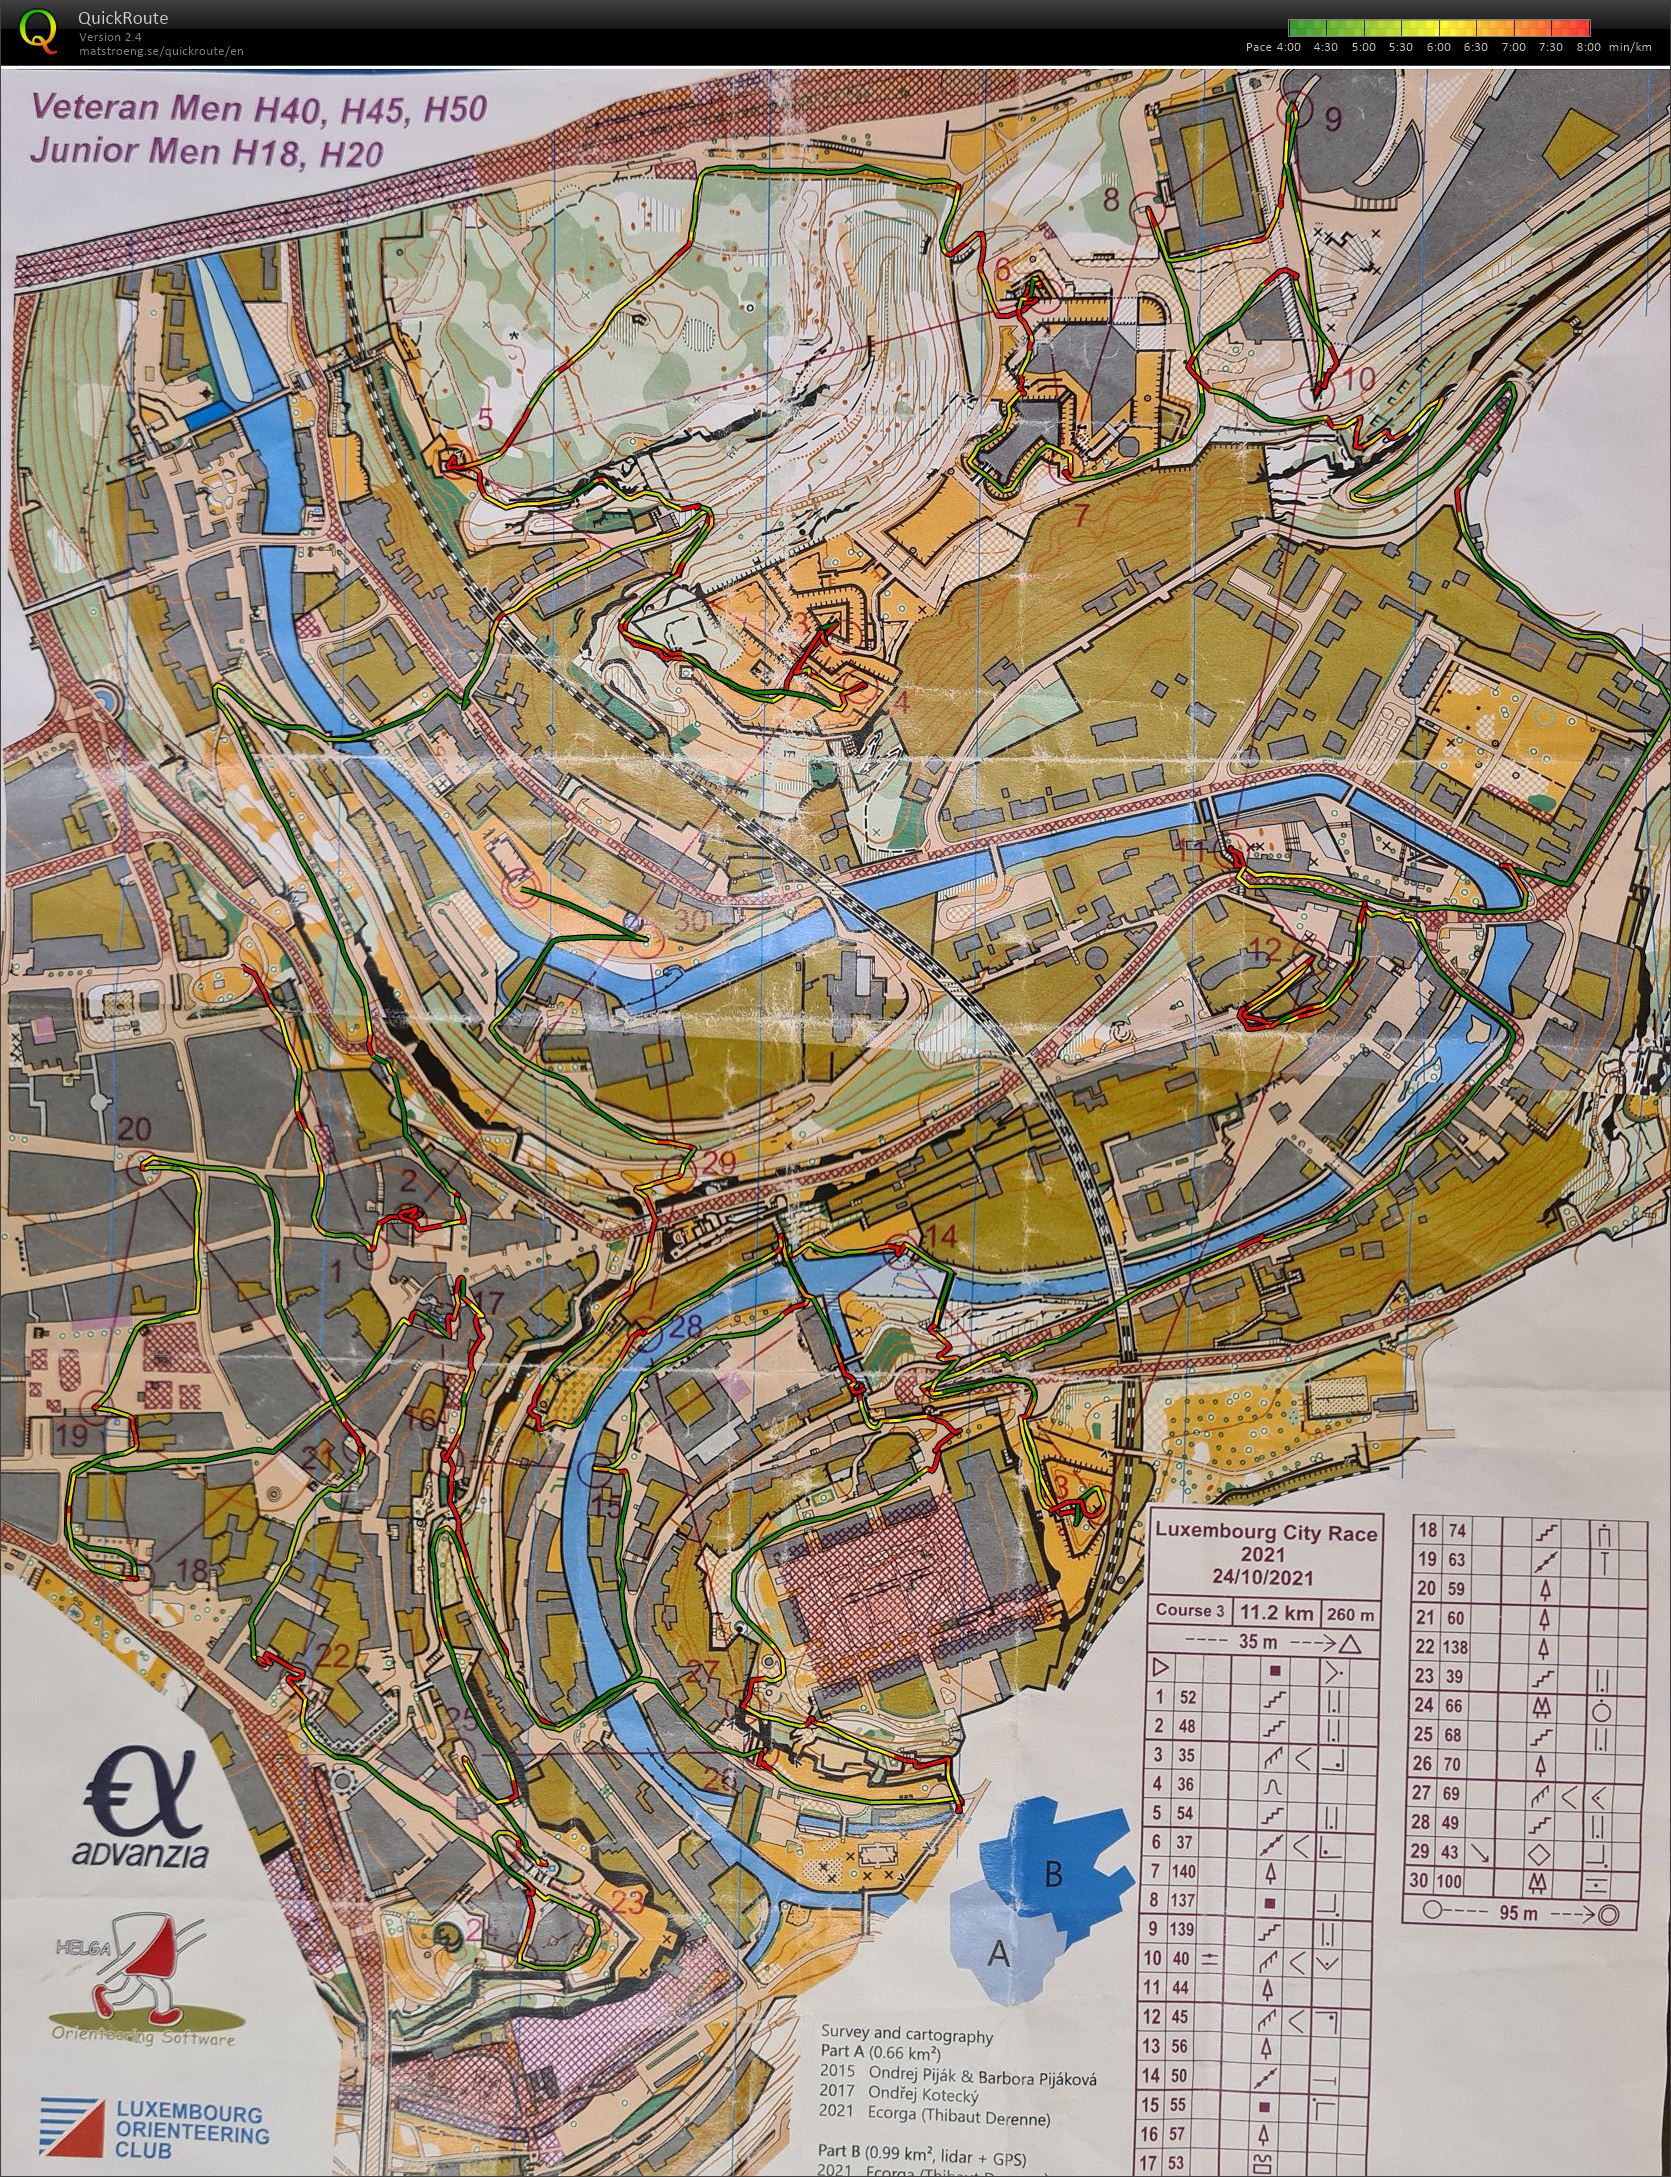 Luxemburg City Race, Long, M50 (24.10.2021)